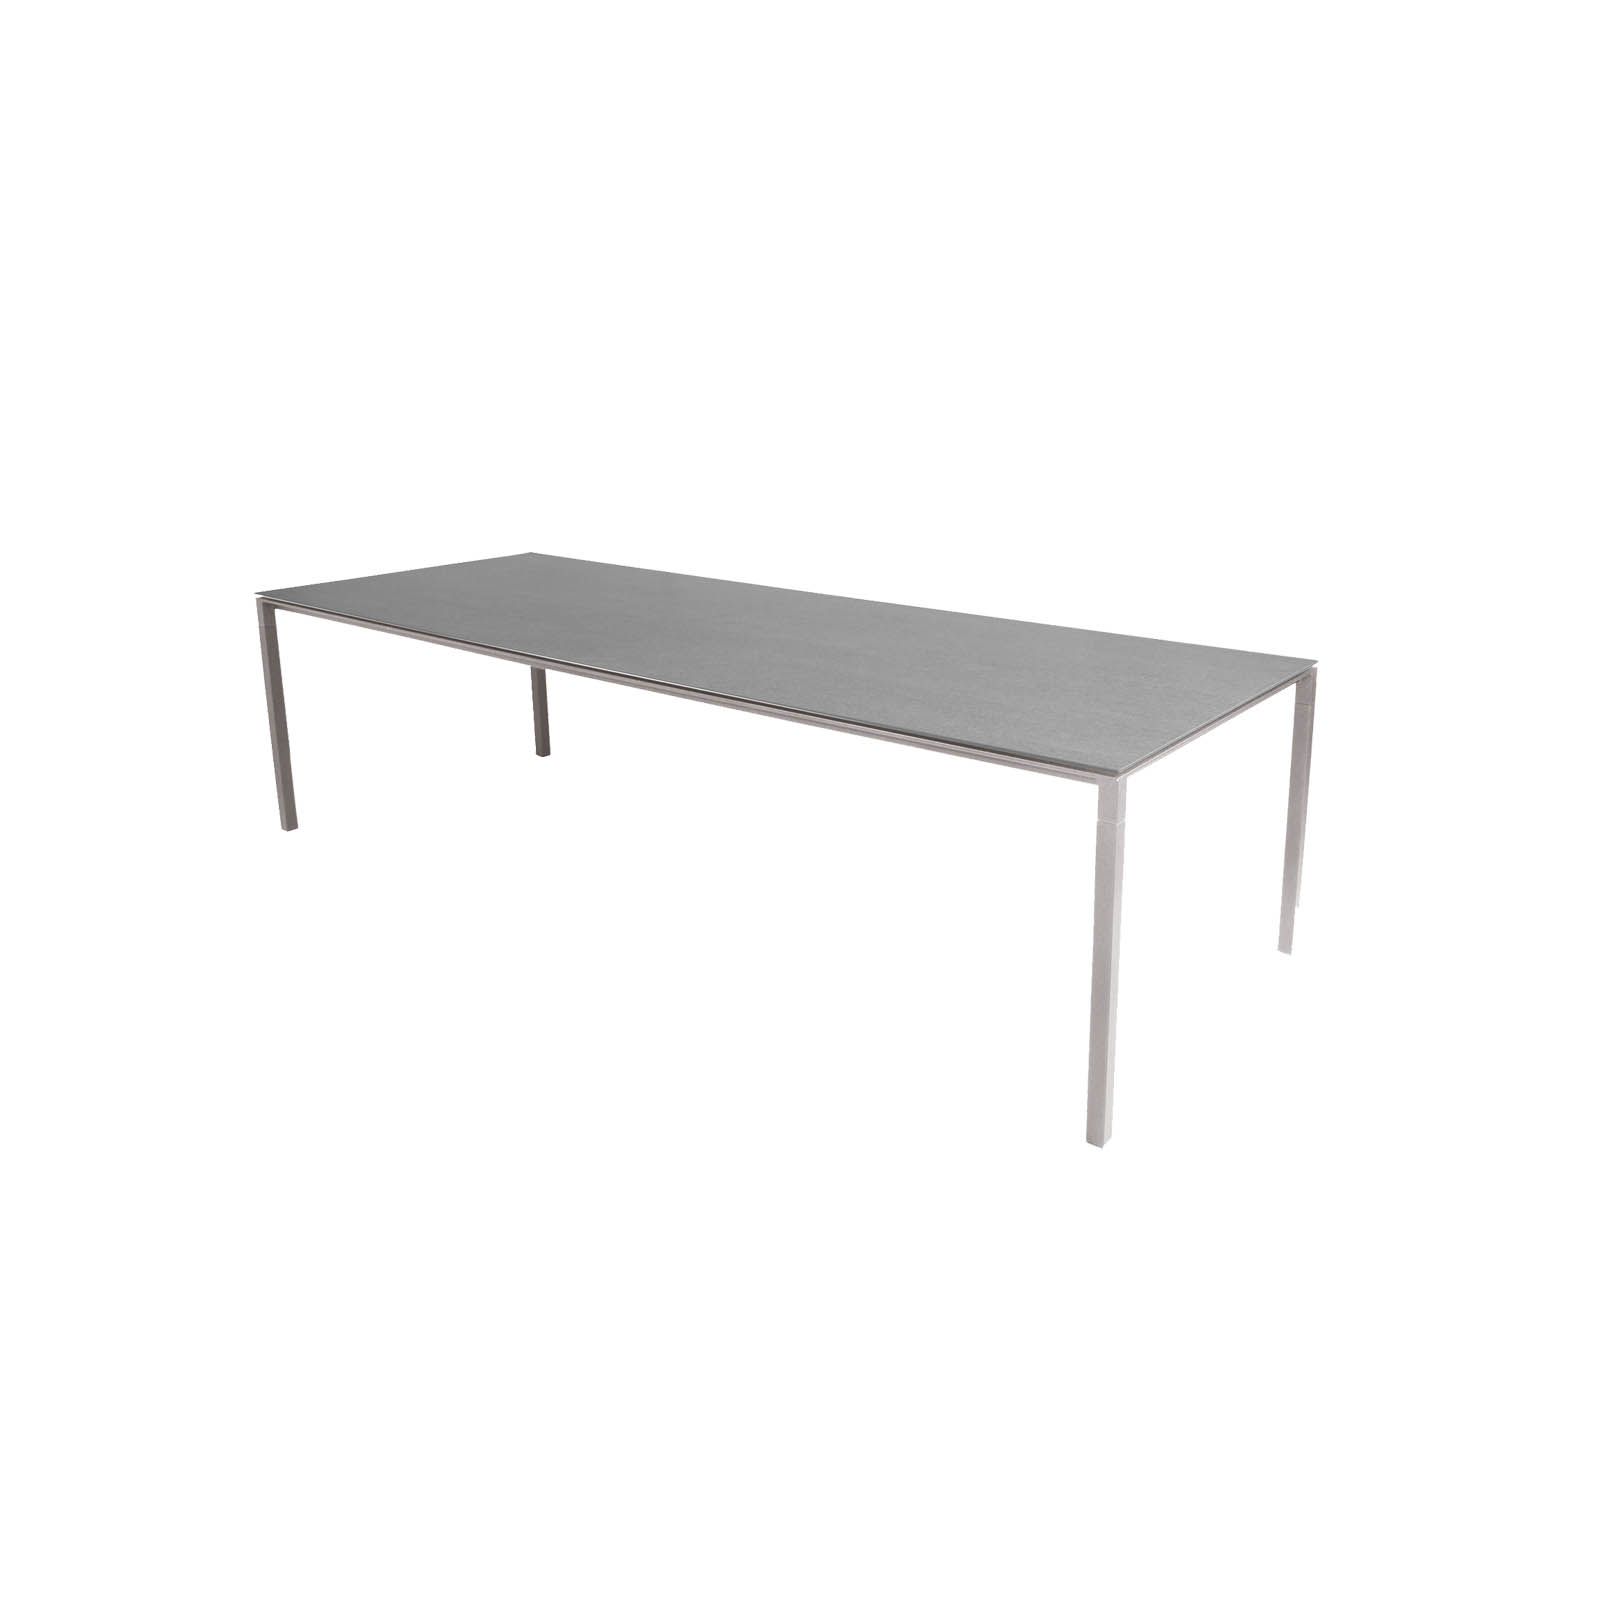 Pure Tisch 280x100 cm aus Aluminium in Taupe mit Tischplatte aus Ceramic in Basalt